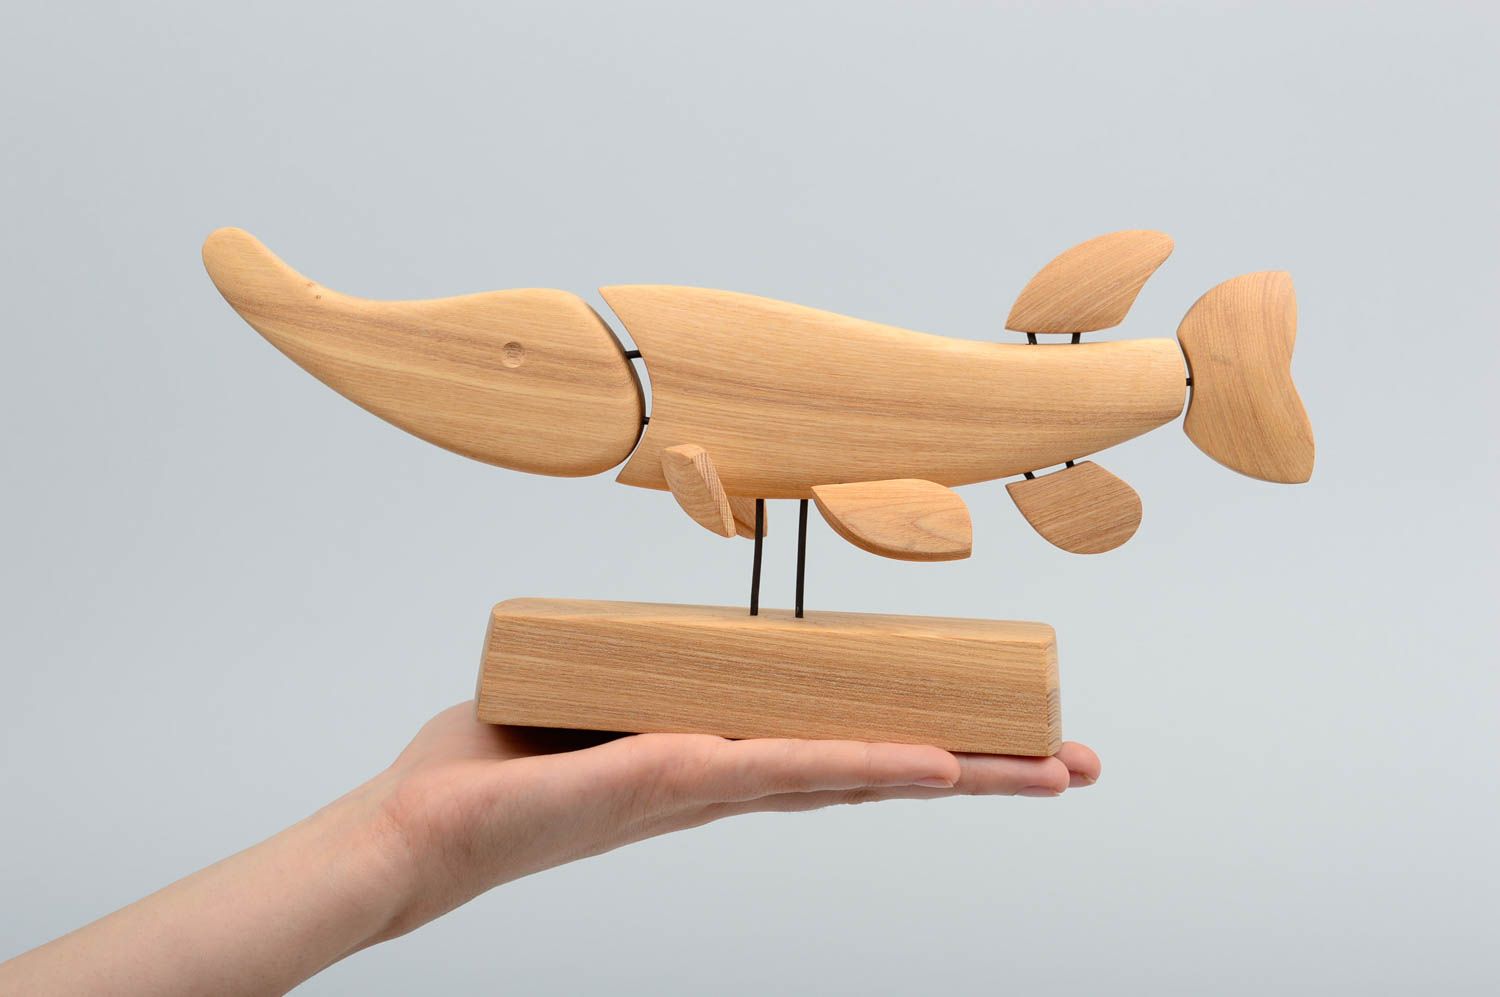 Wooden sculpture wood toy handmade home decor wooden gifts souvenir ideas photo 5